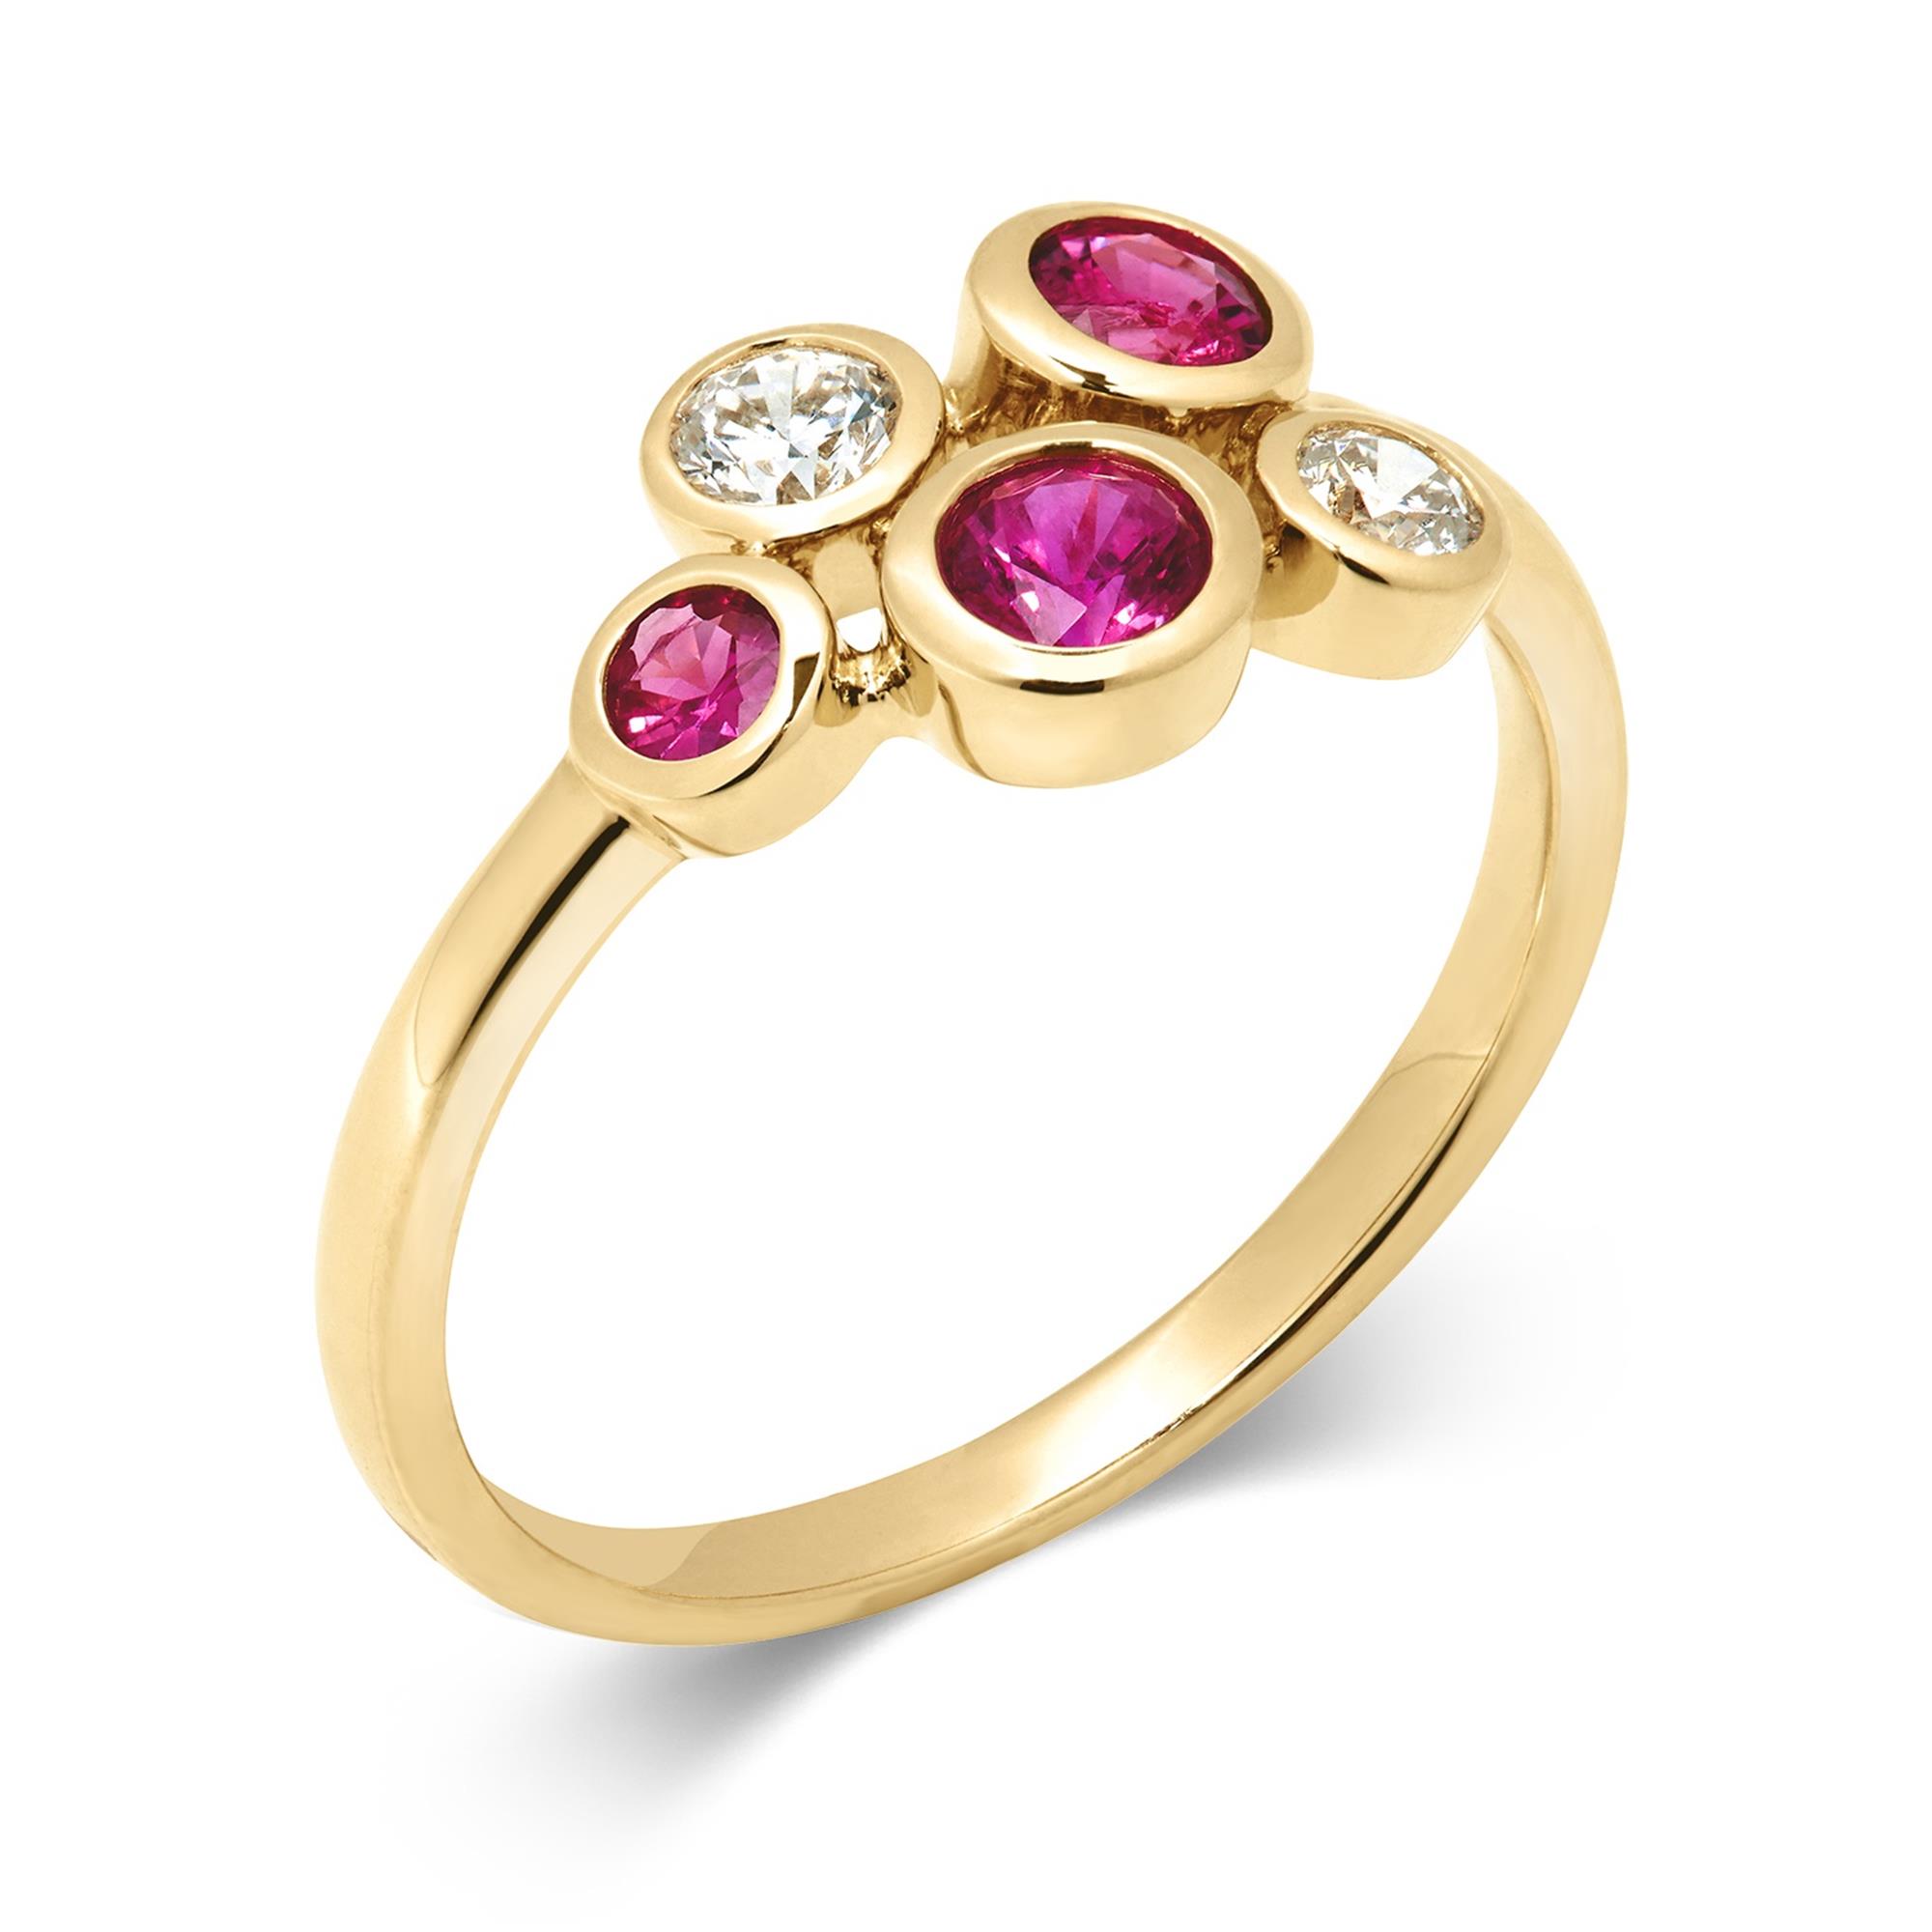 Alchemy Ruby and Diamond Ring | Pravins